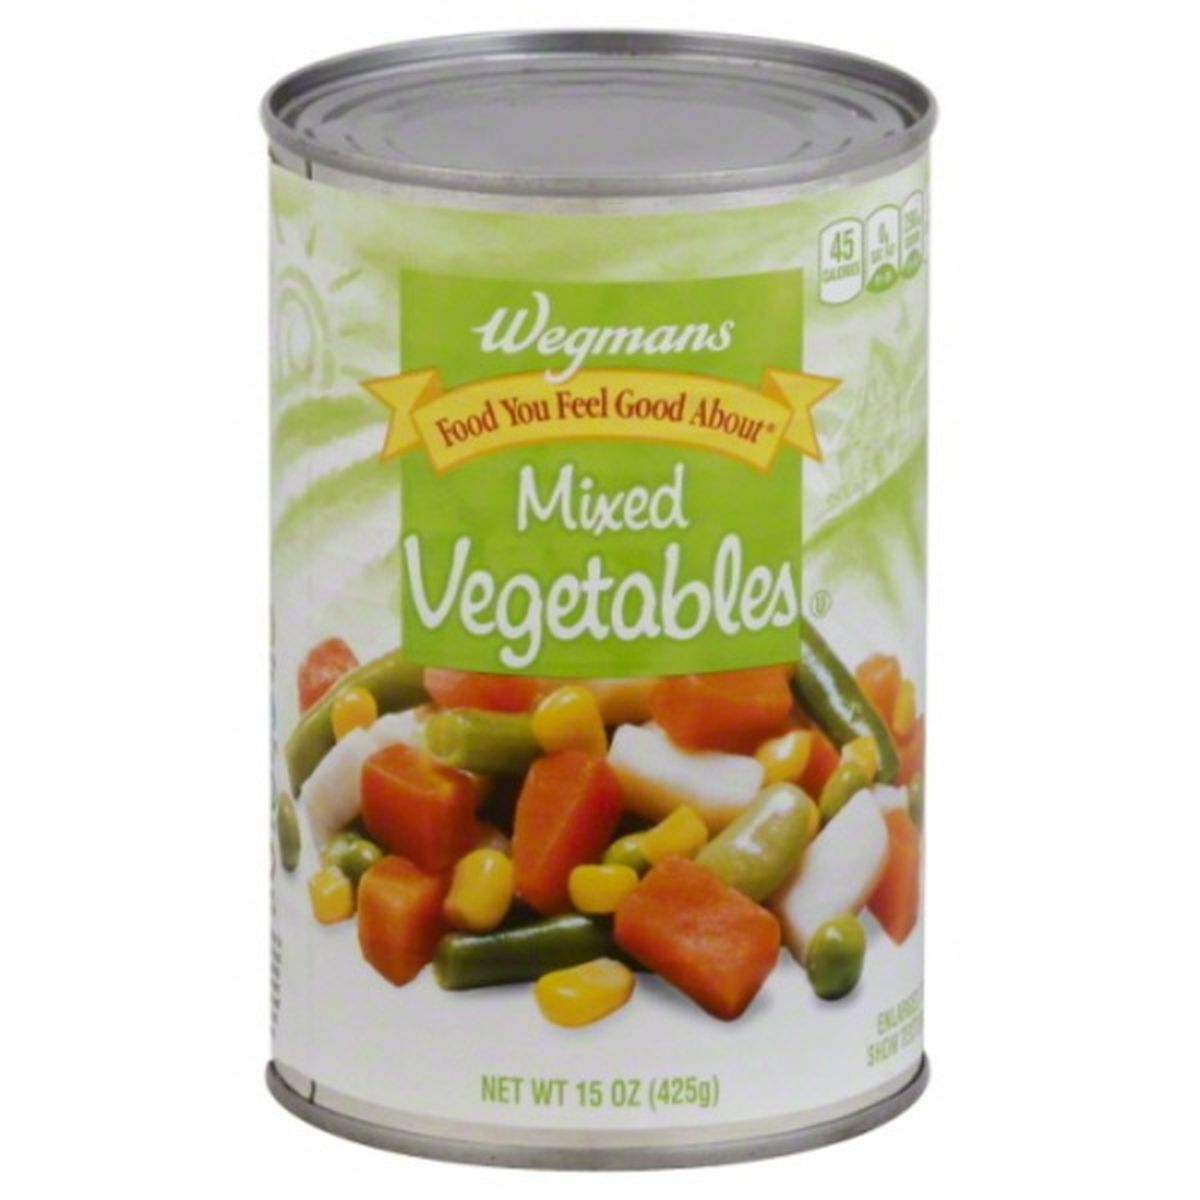 Calories in Wegmans Mixed Vegetables